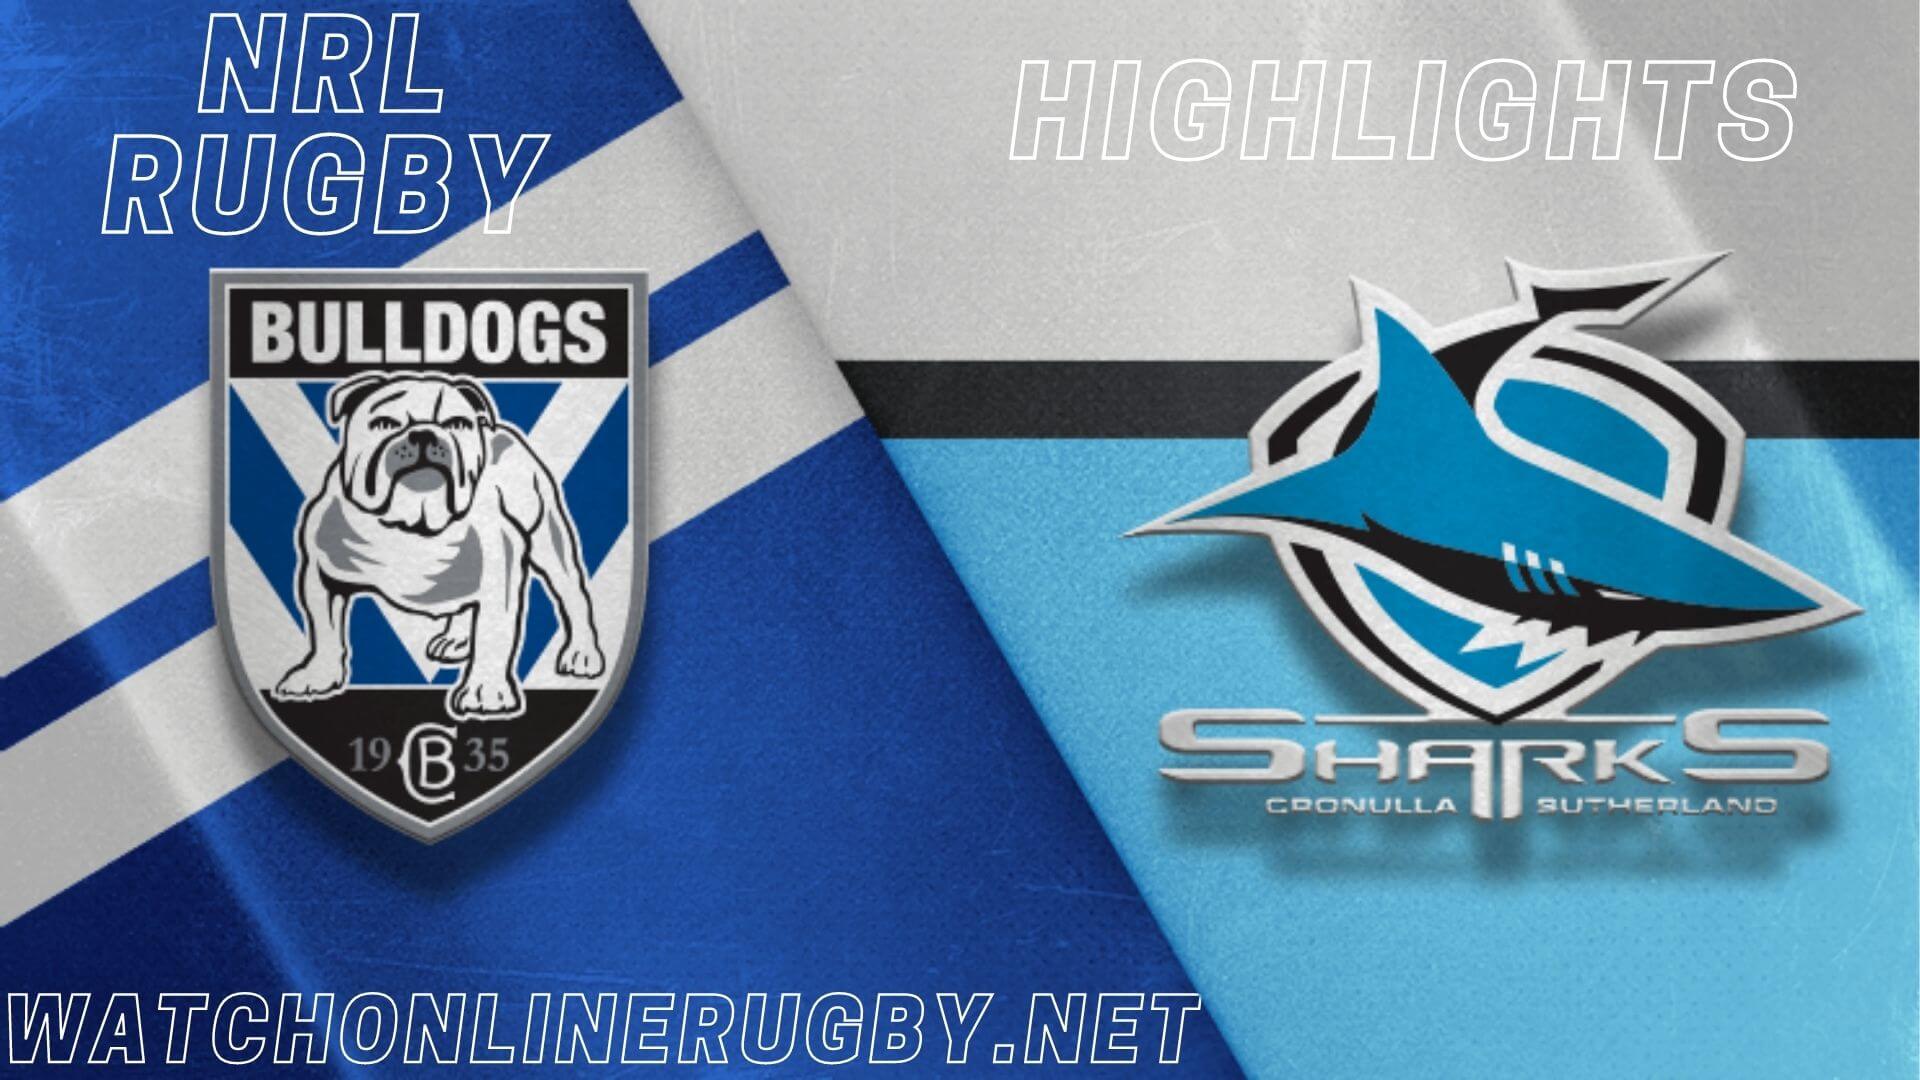 Sharks Vs Bulldogs Highlights RD 24 NRL Rugby